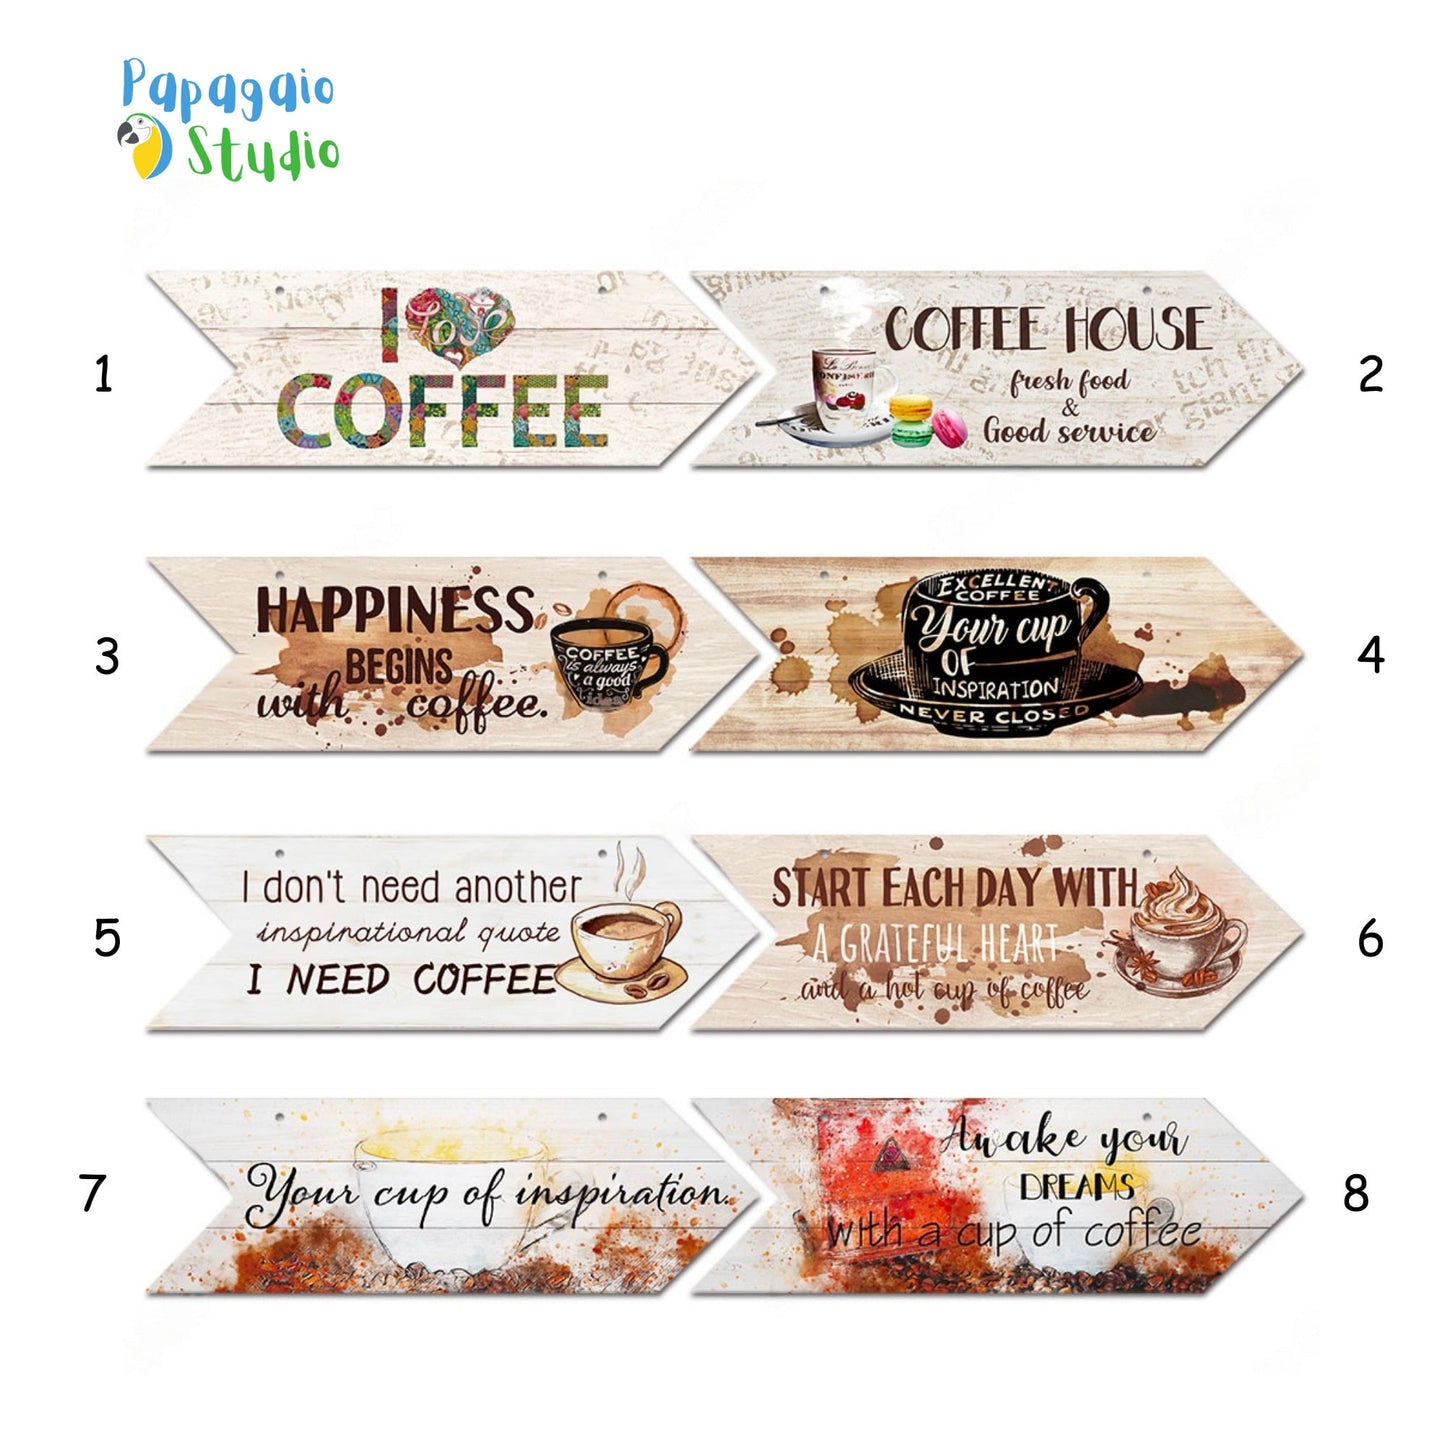 Coffee Wood Arrow Sign | Breakfast Nook Wooden Plaque Housewarming Gift Idea | Cafe Kitchen Coffee Shop Wall Hanging Decor | Papagaio Studio Etsy Shop